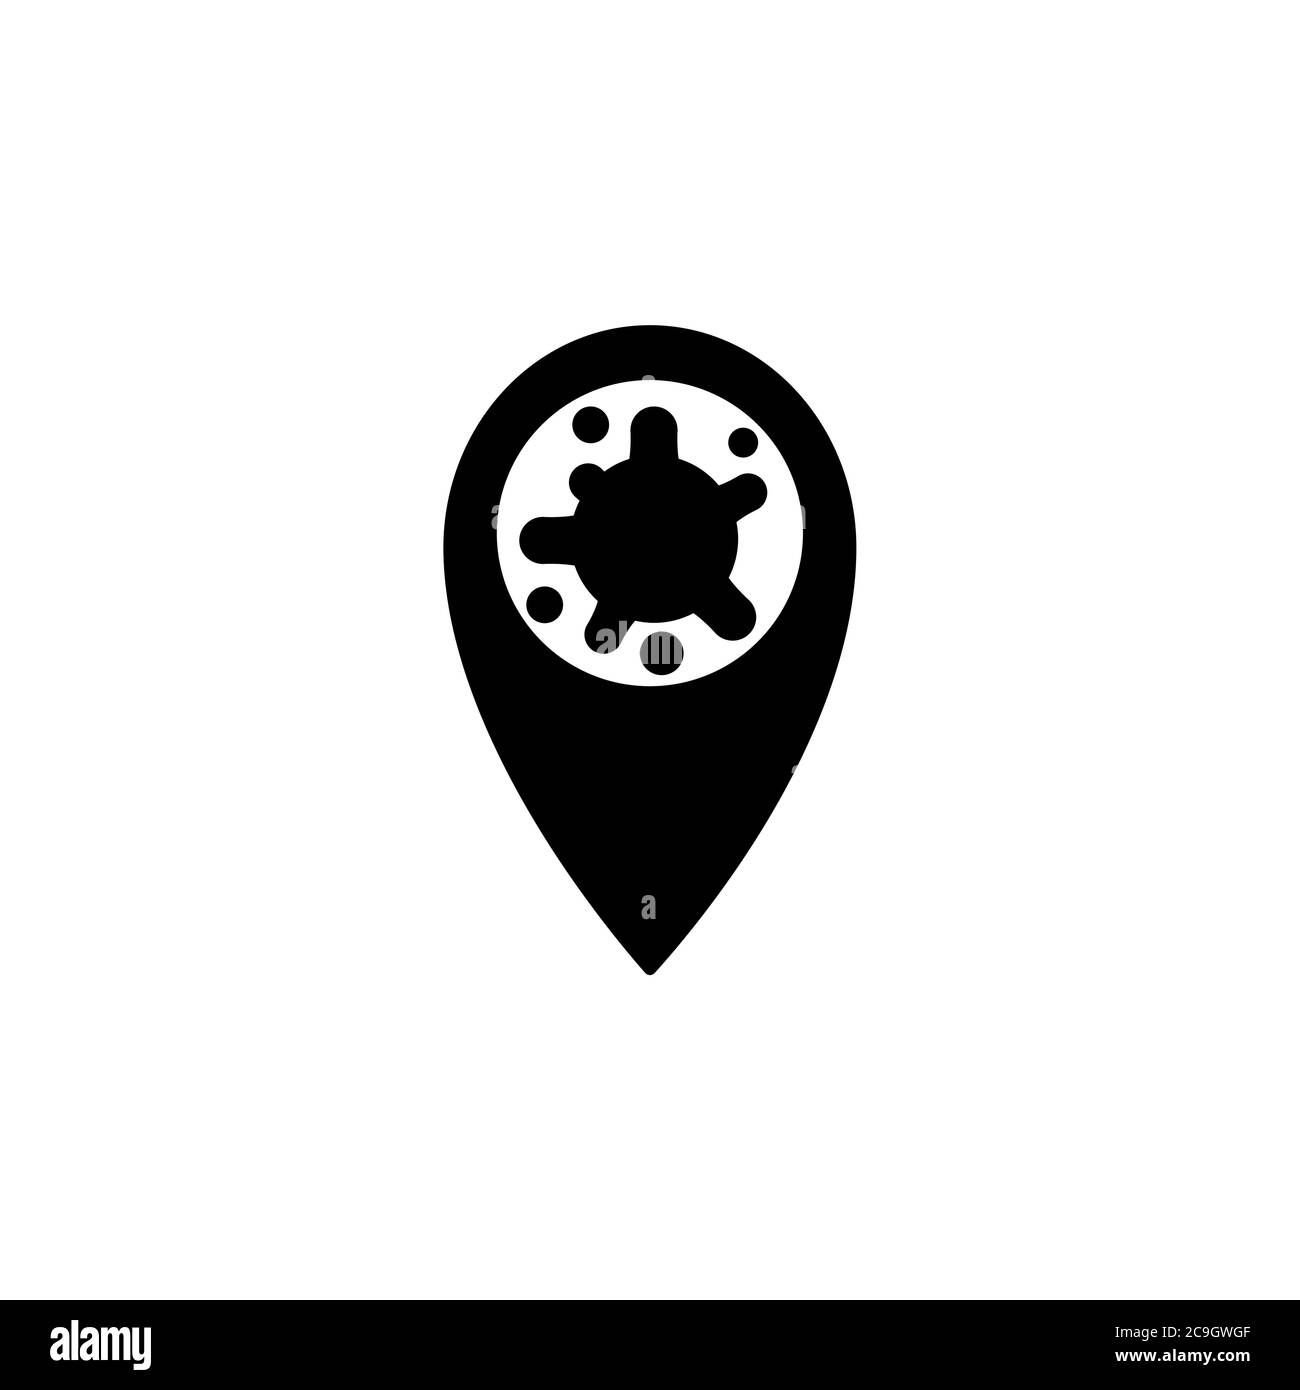 Virus, bacteria and map pointer icon, symbol, sign. coronavirus, COVID-19 icon, logo black on white background. Stock Vector